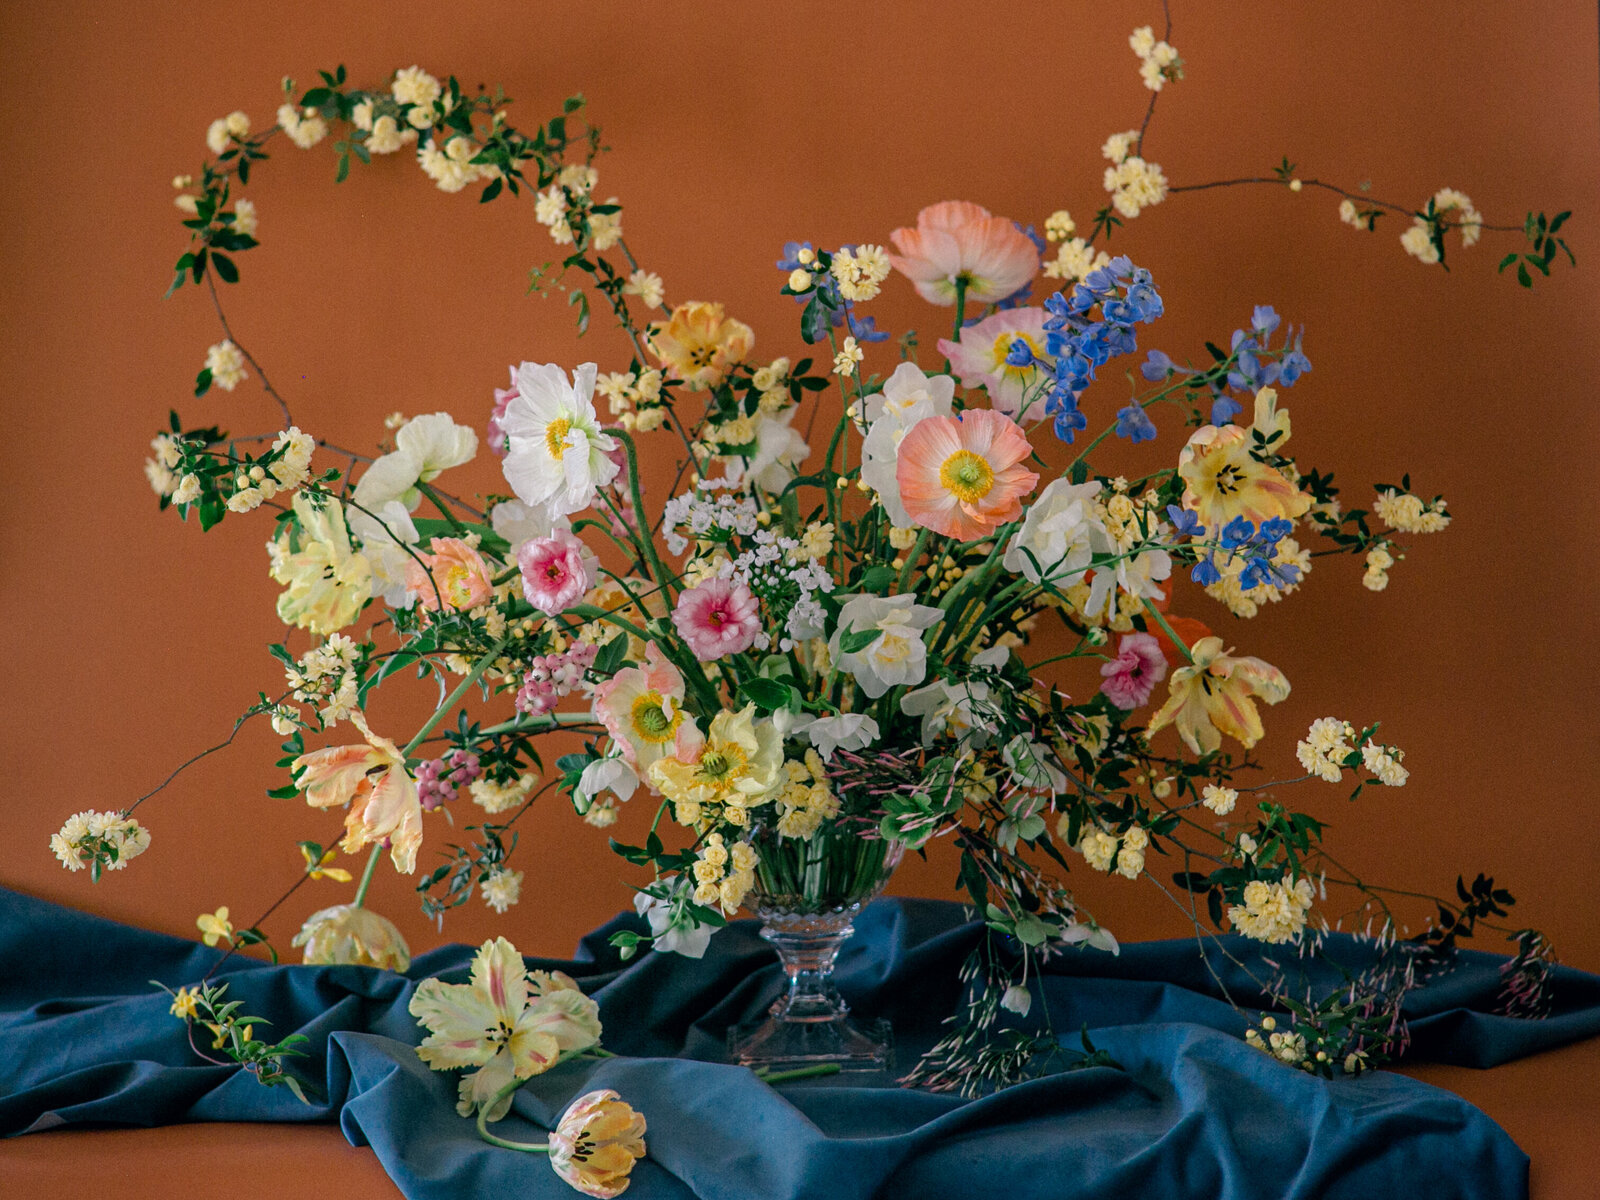 max-owens-design-at-home-floral-arrangements-28-colorful